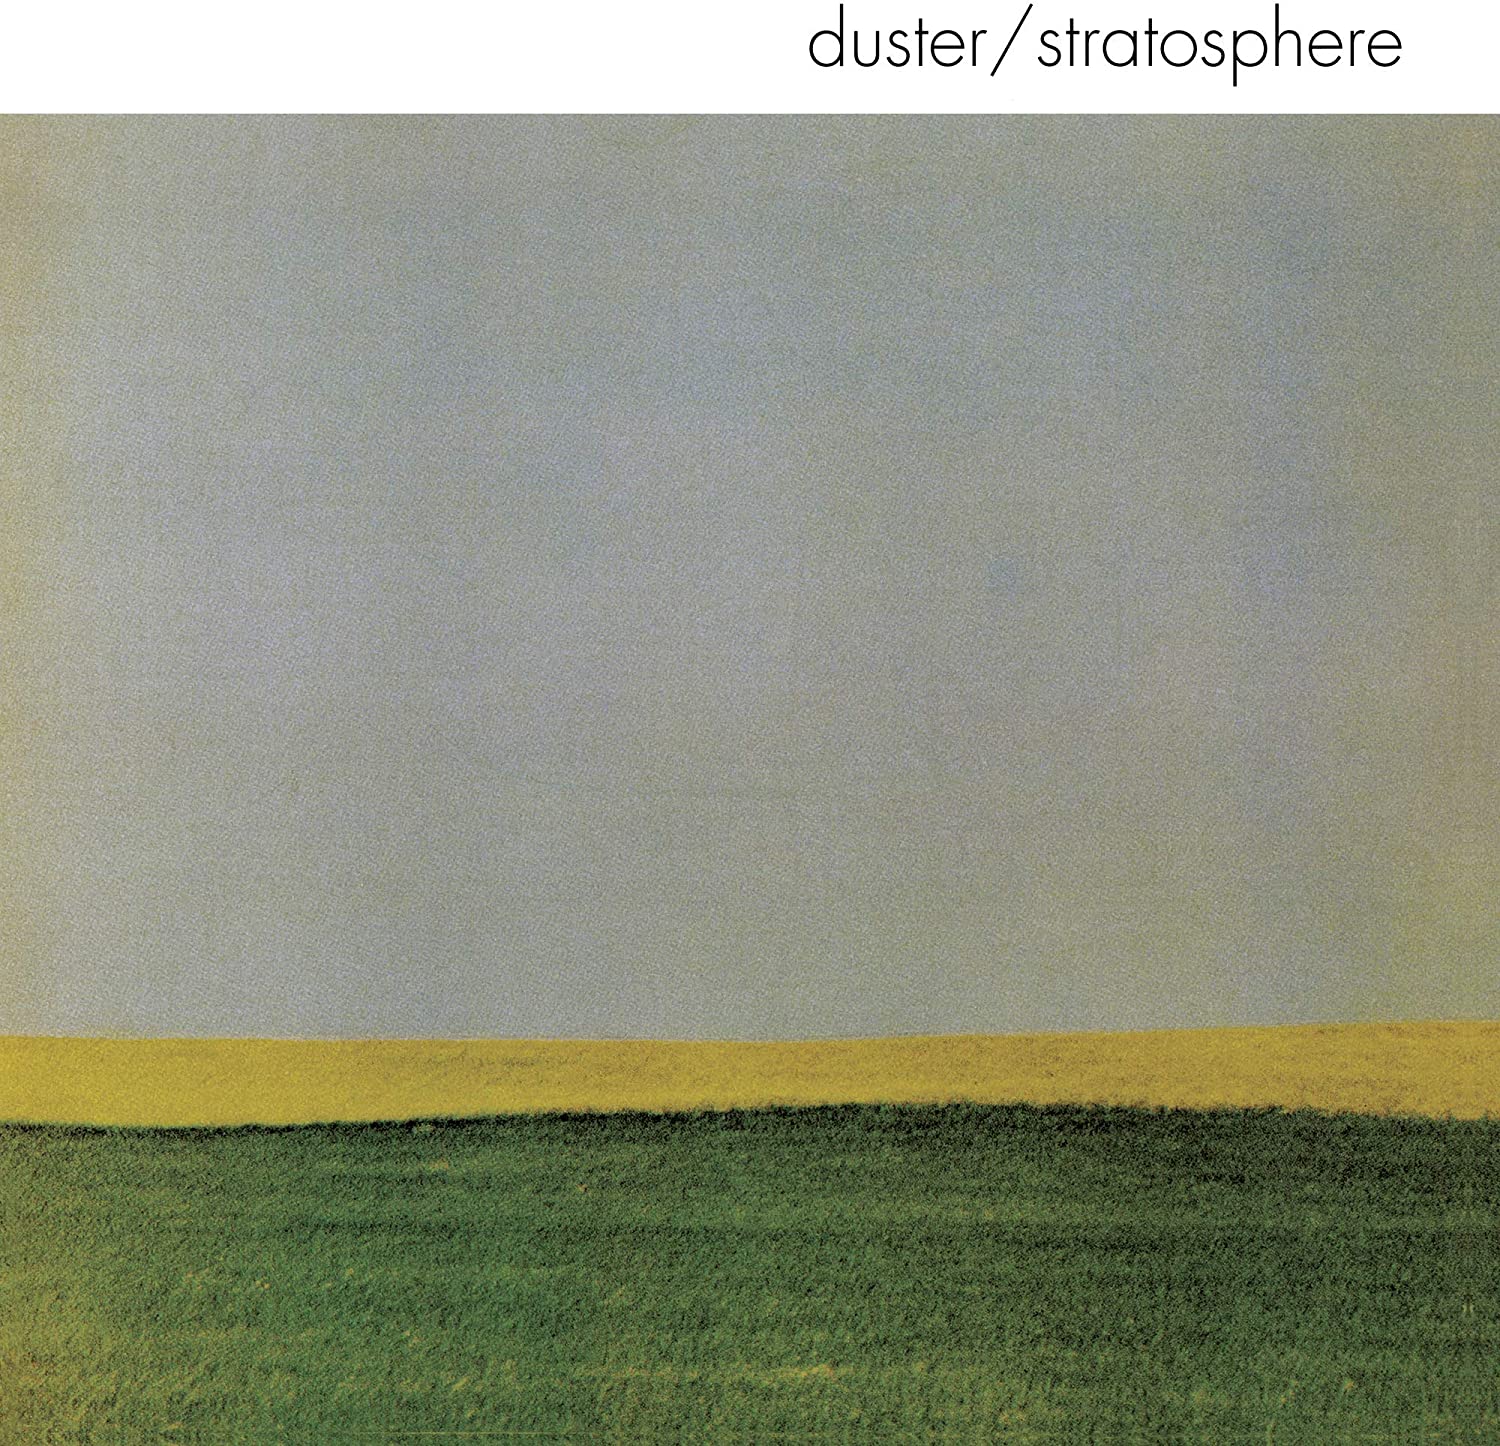 Duster - Stratosphere (Vinyl LP)